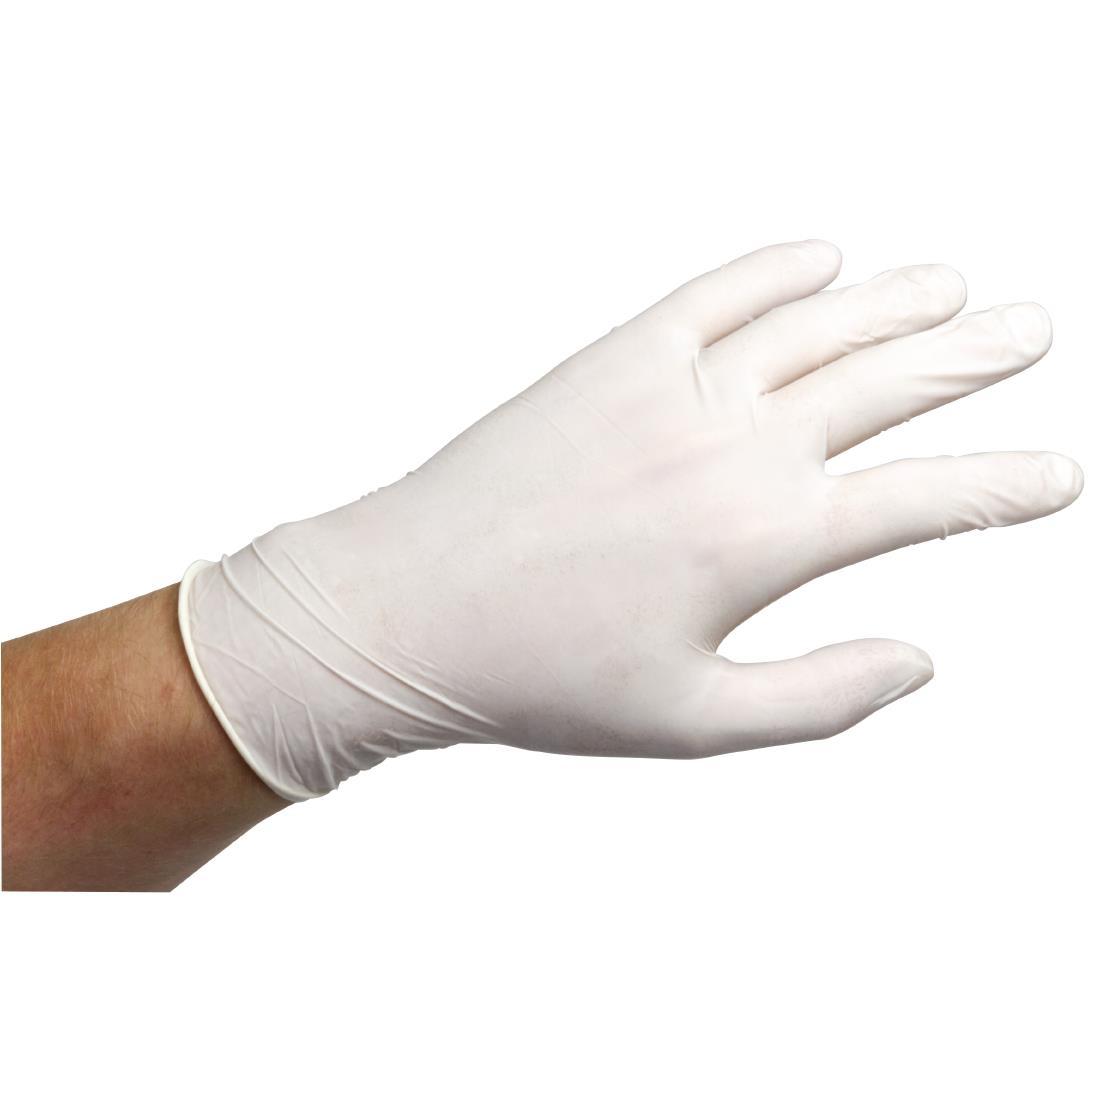 Powdered Latex Gloves Medium (Pack of 100) - A228-M  - 2